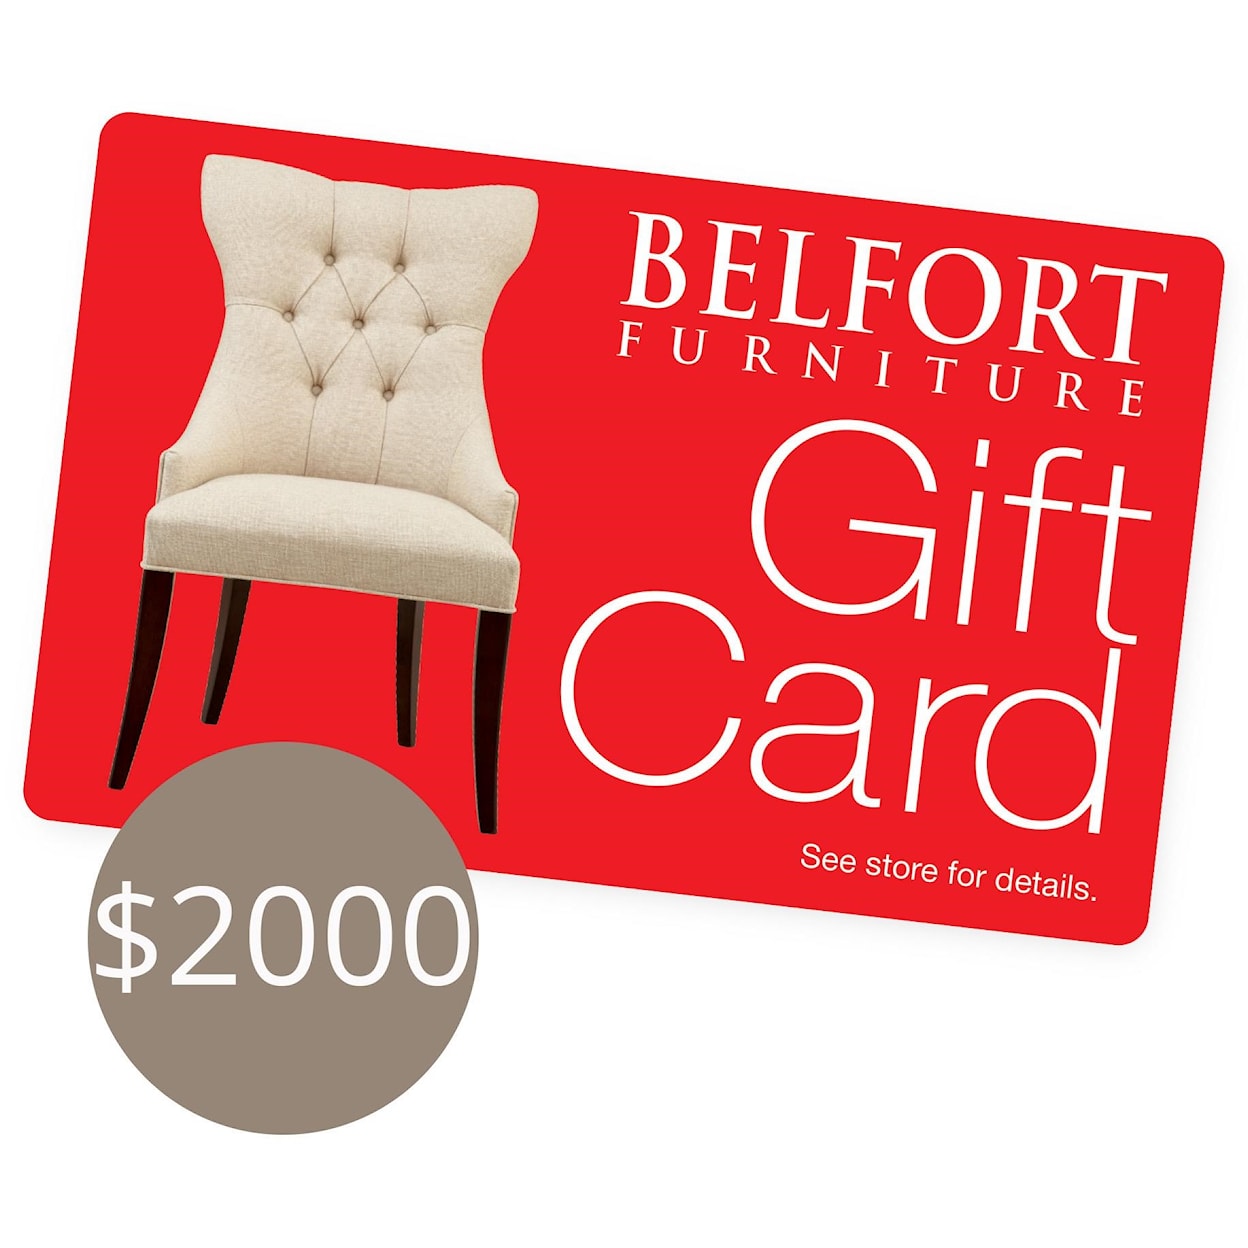 Belfort Furniture Gift Cards $2000 Belfort Gift Card